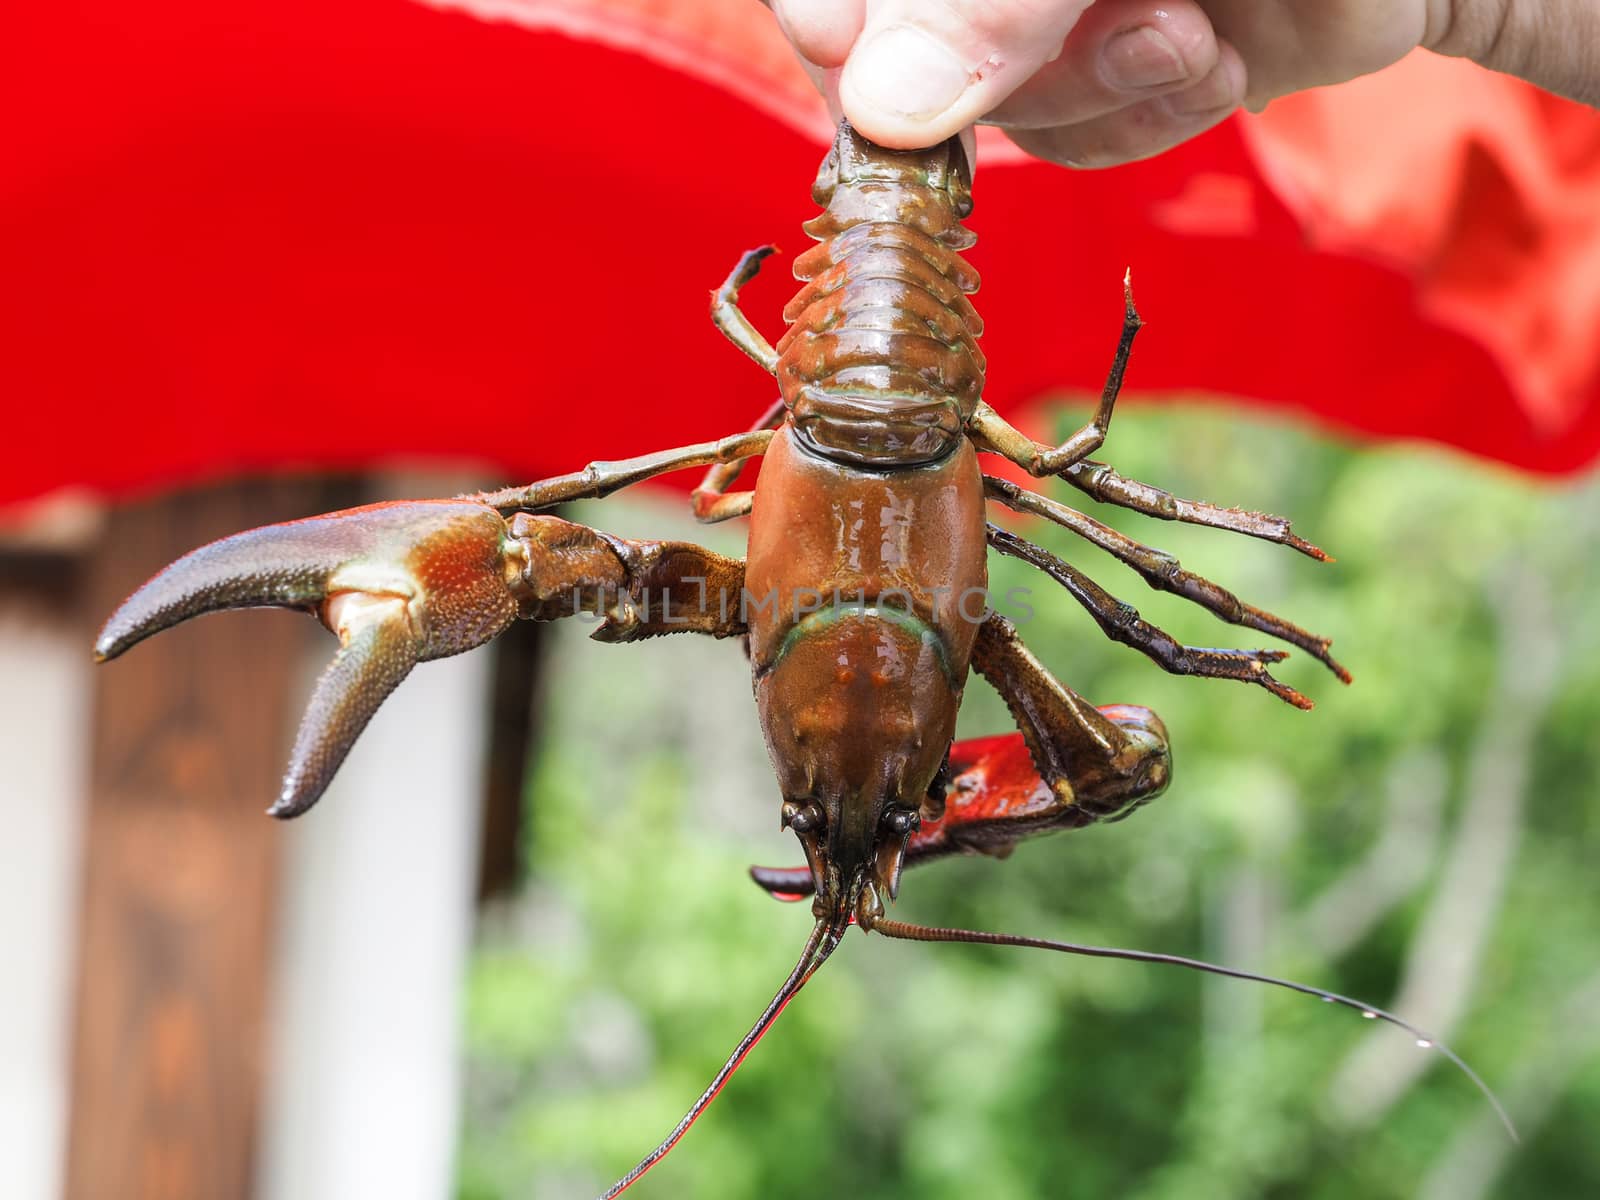 Signal crayfish in a hand by reinerc